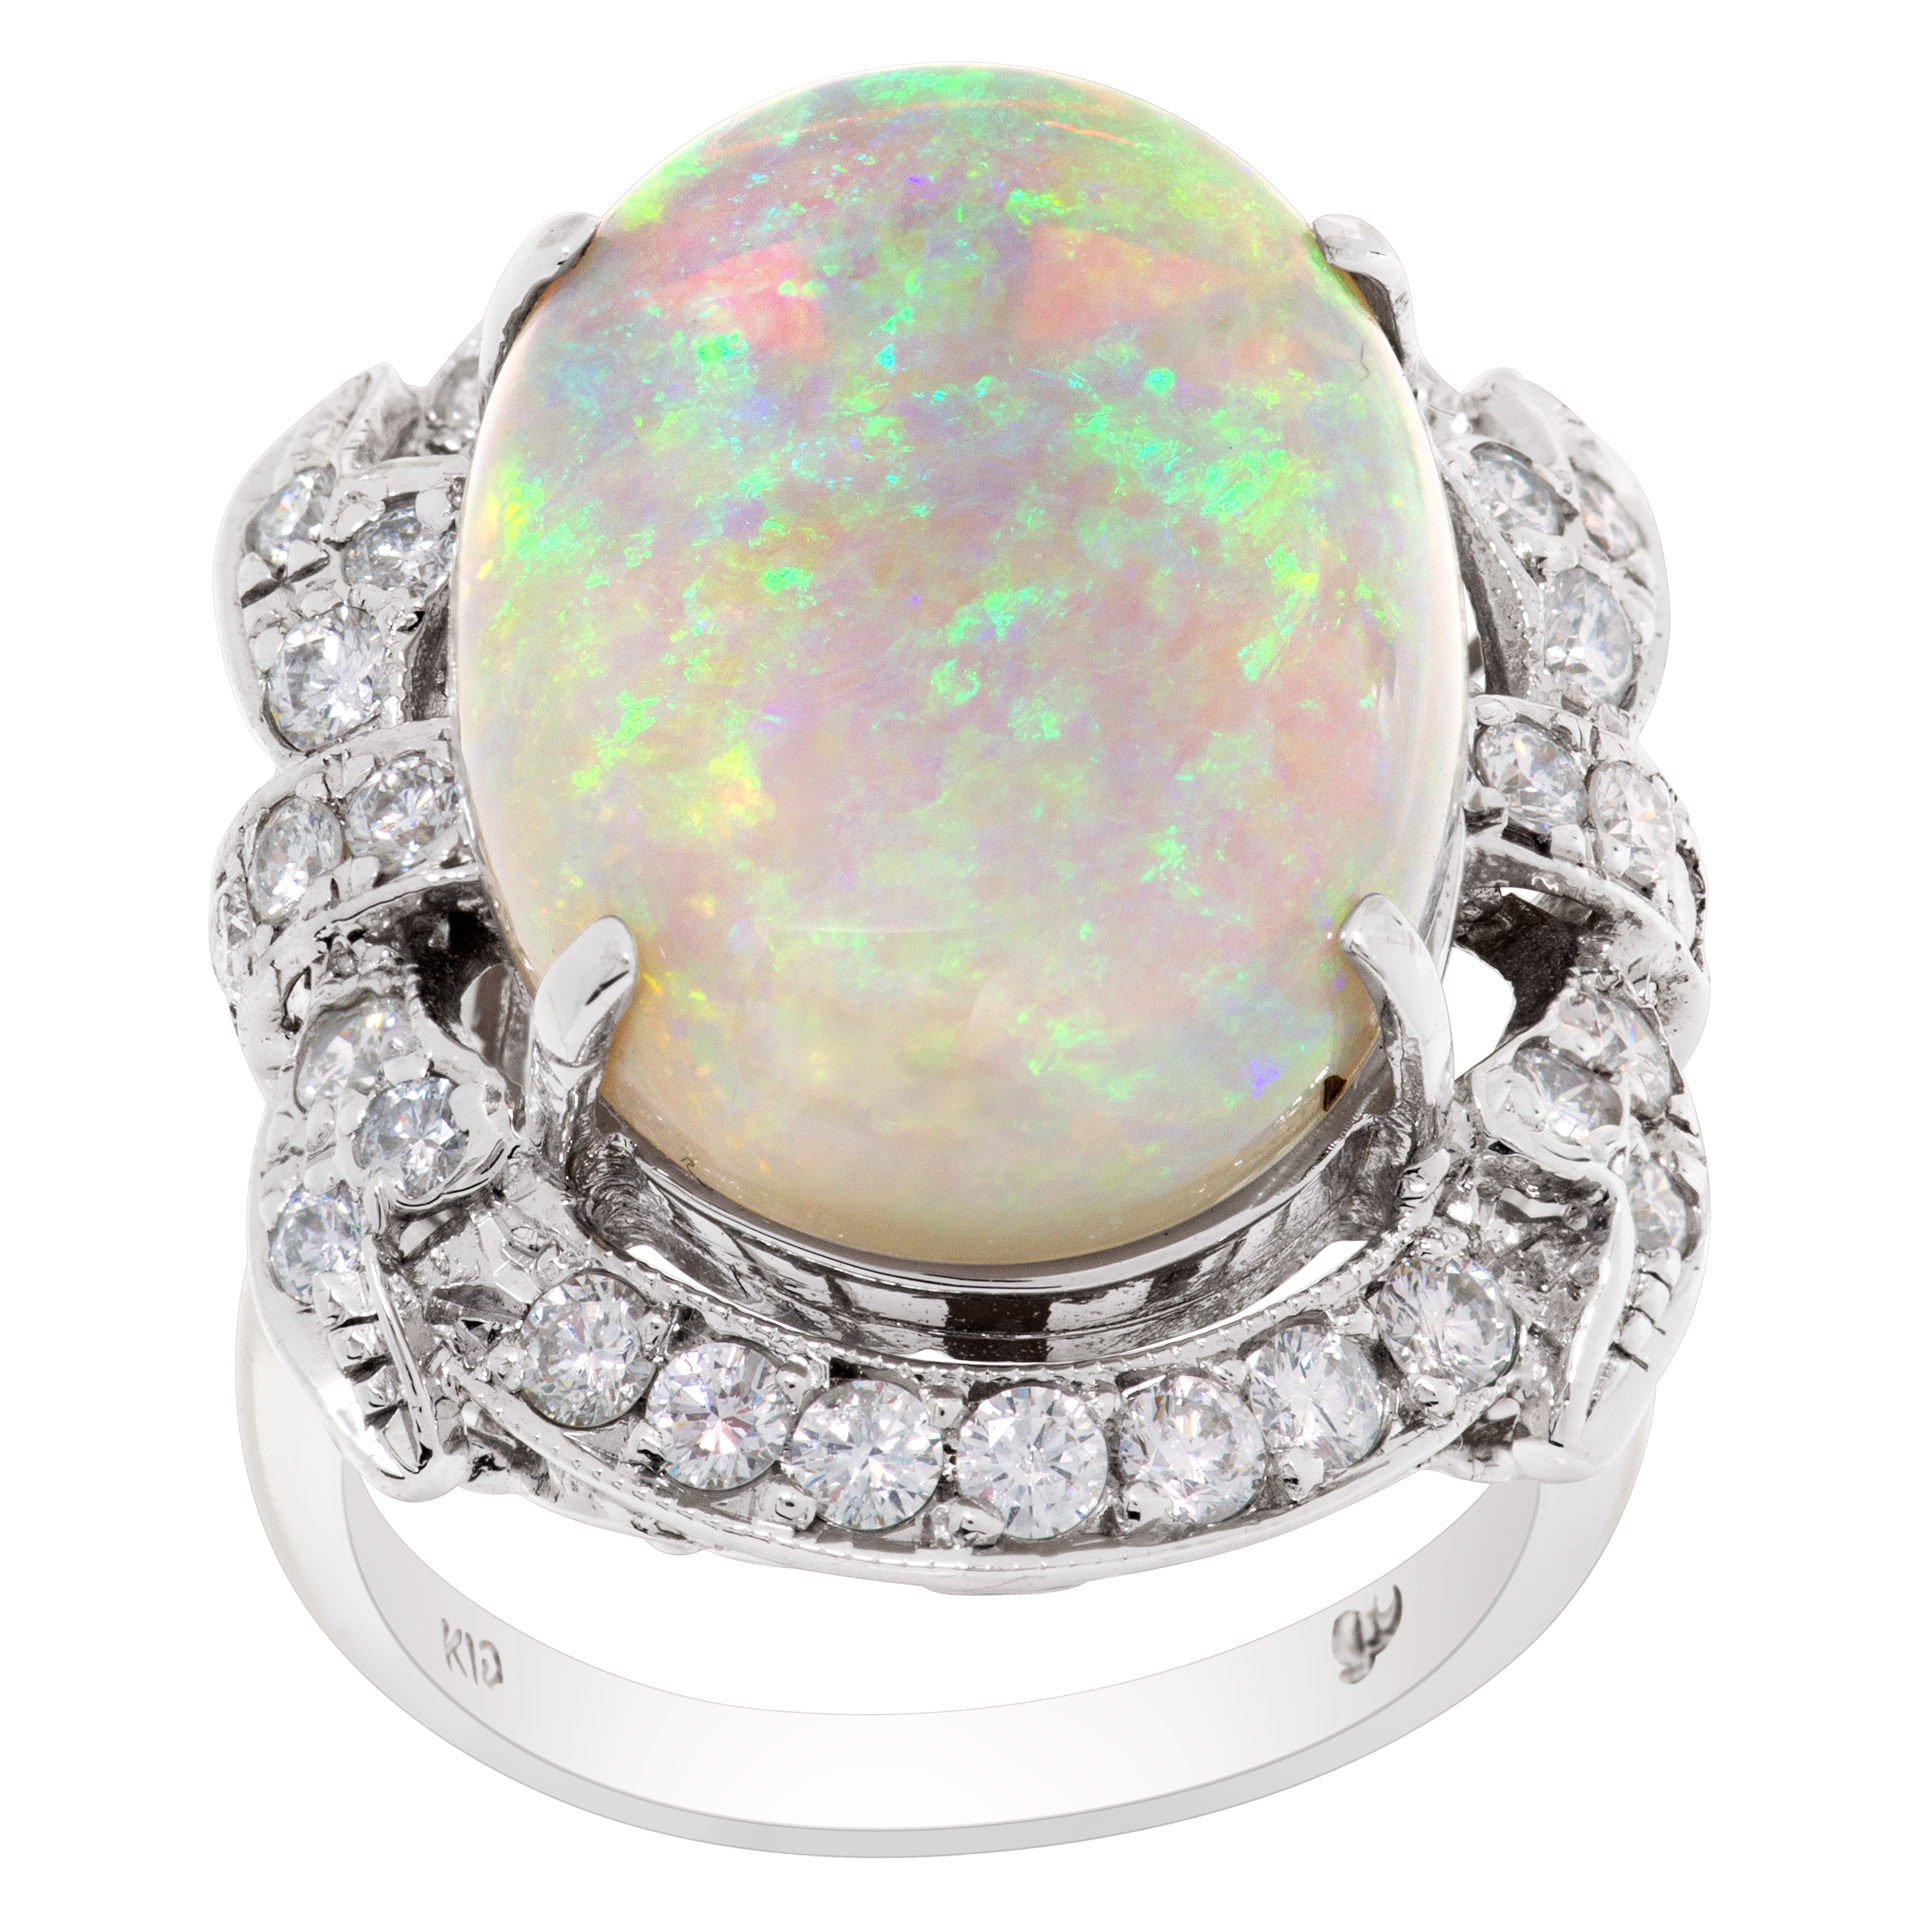 Australian opal & diamond ring in 18k white gold. 1.16 carats in diamonds. Size 7.5